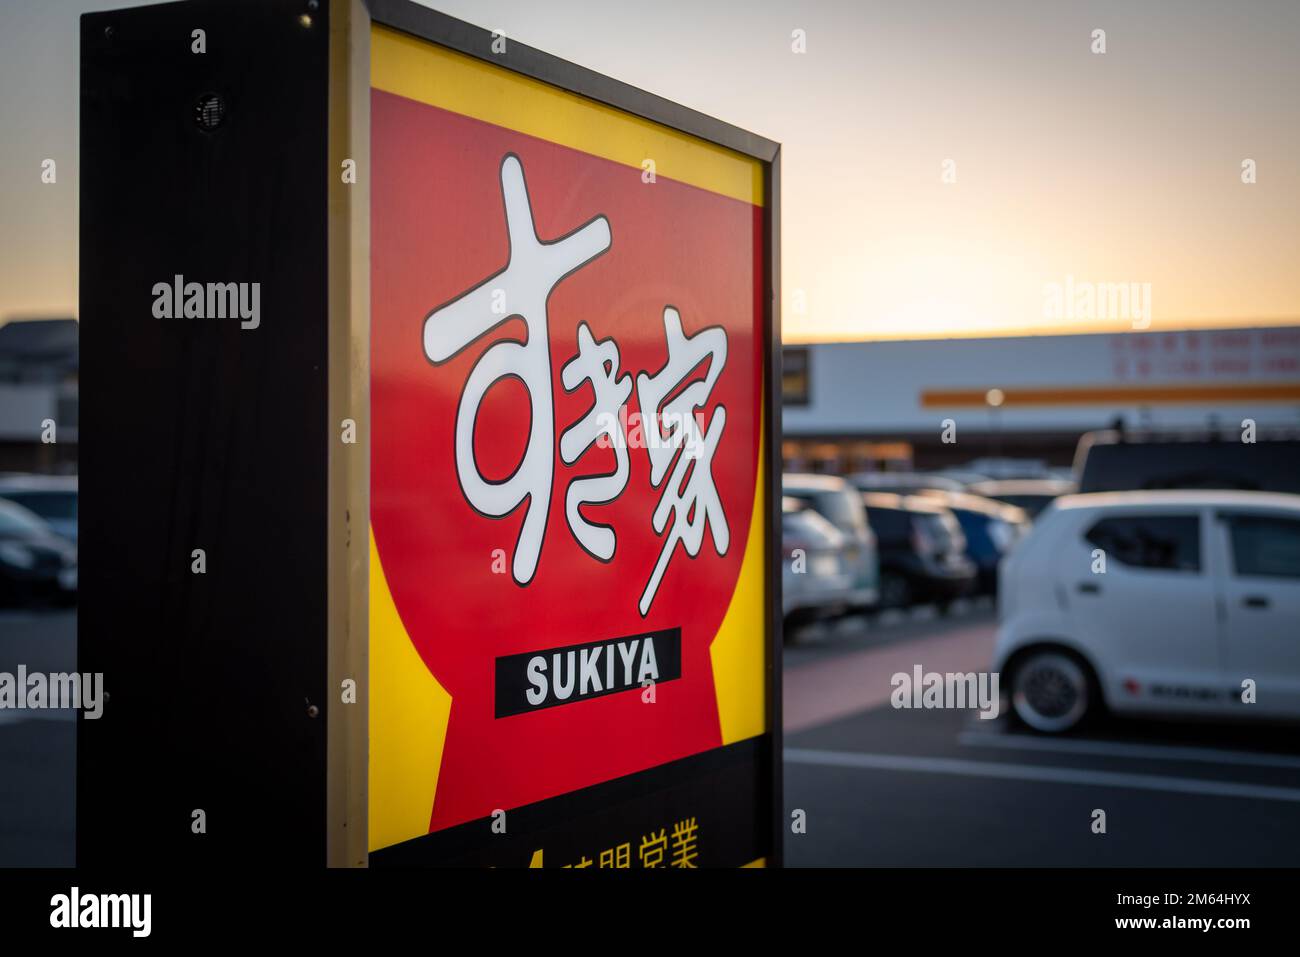 Sukiya is a Japanese rice topping restaurant and drive thru service Stock Photo